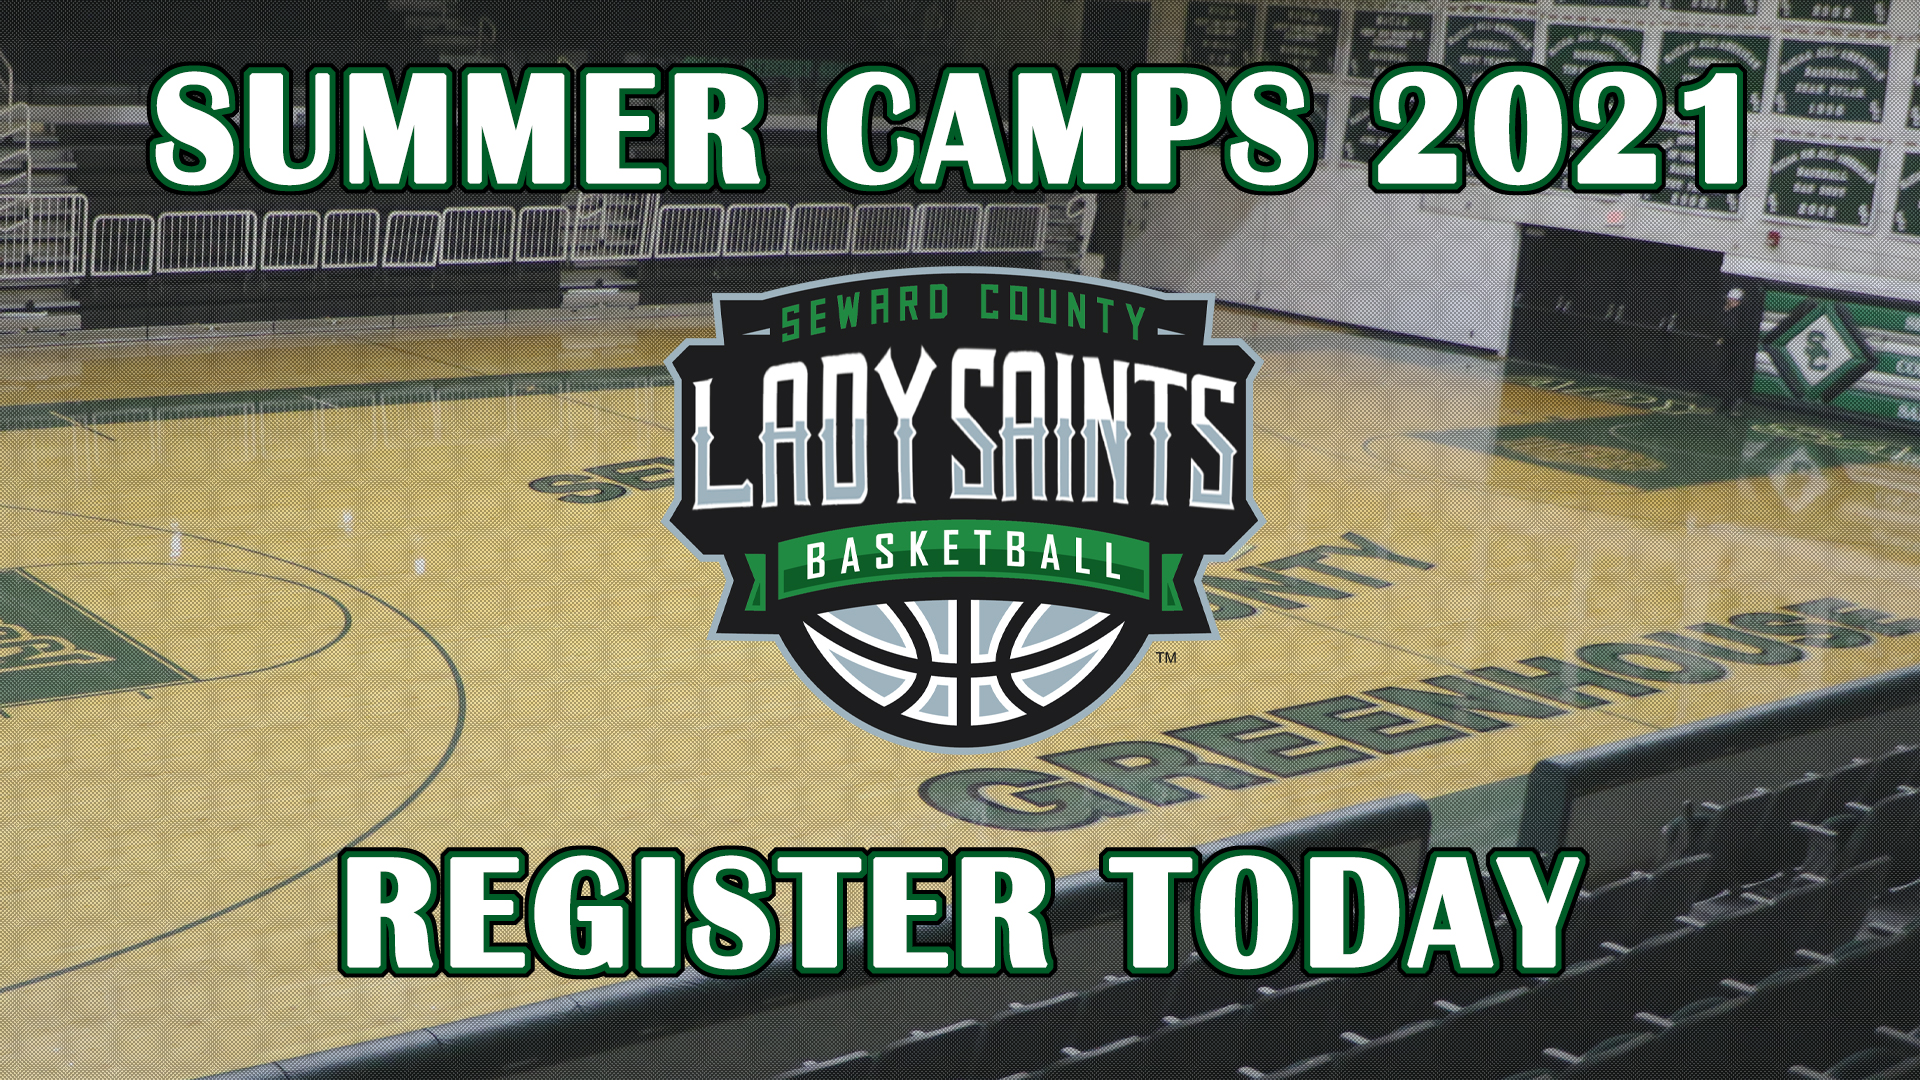 Lady Saints Summer Camps open for registration